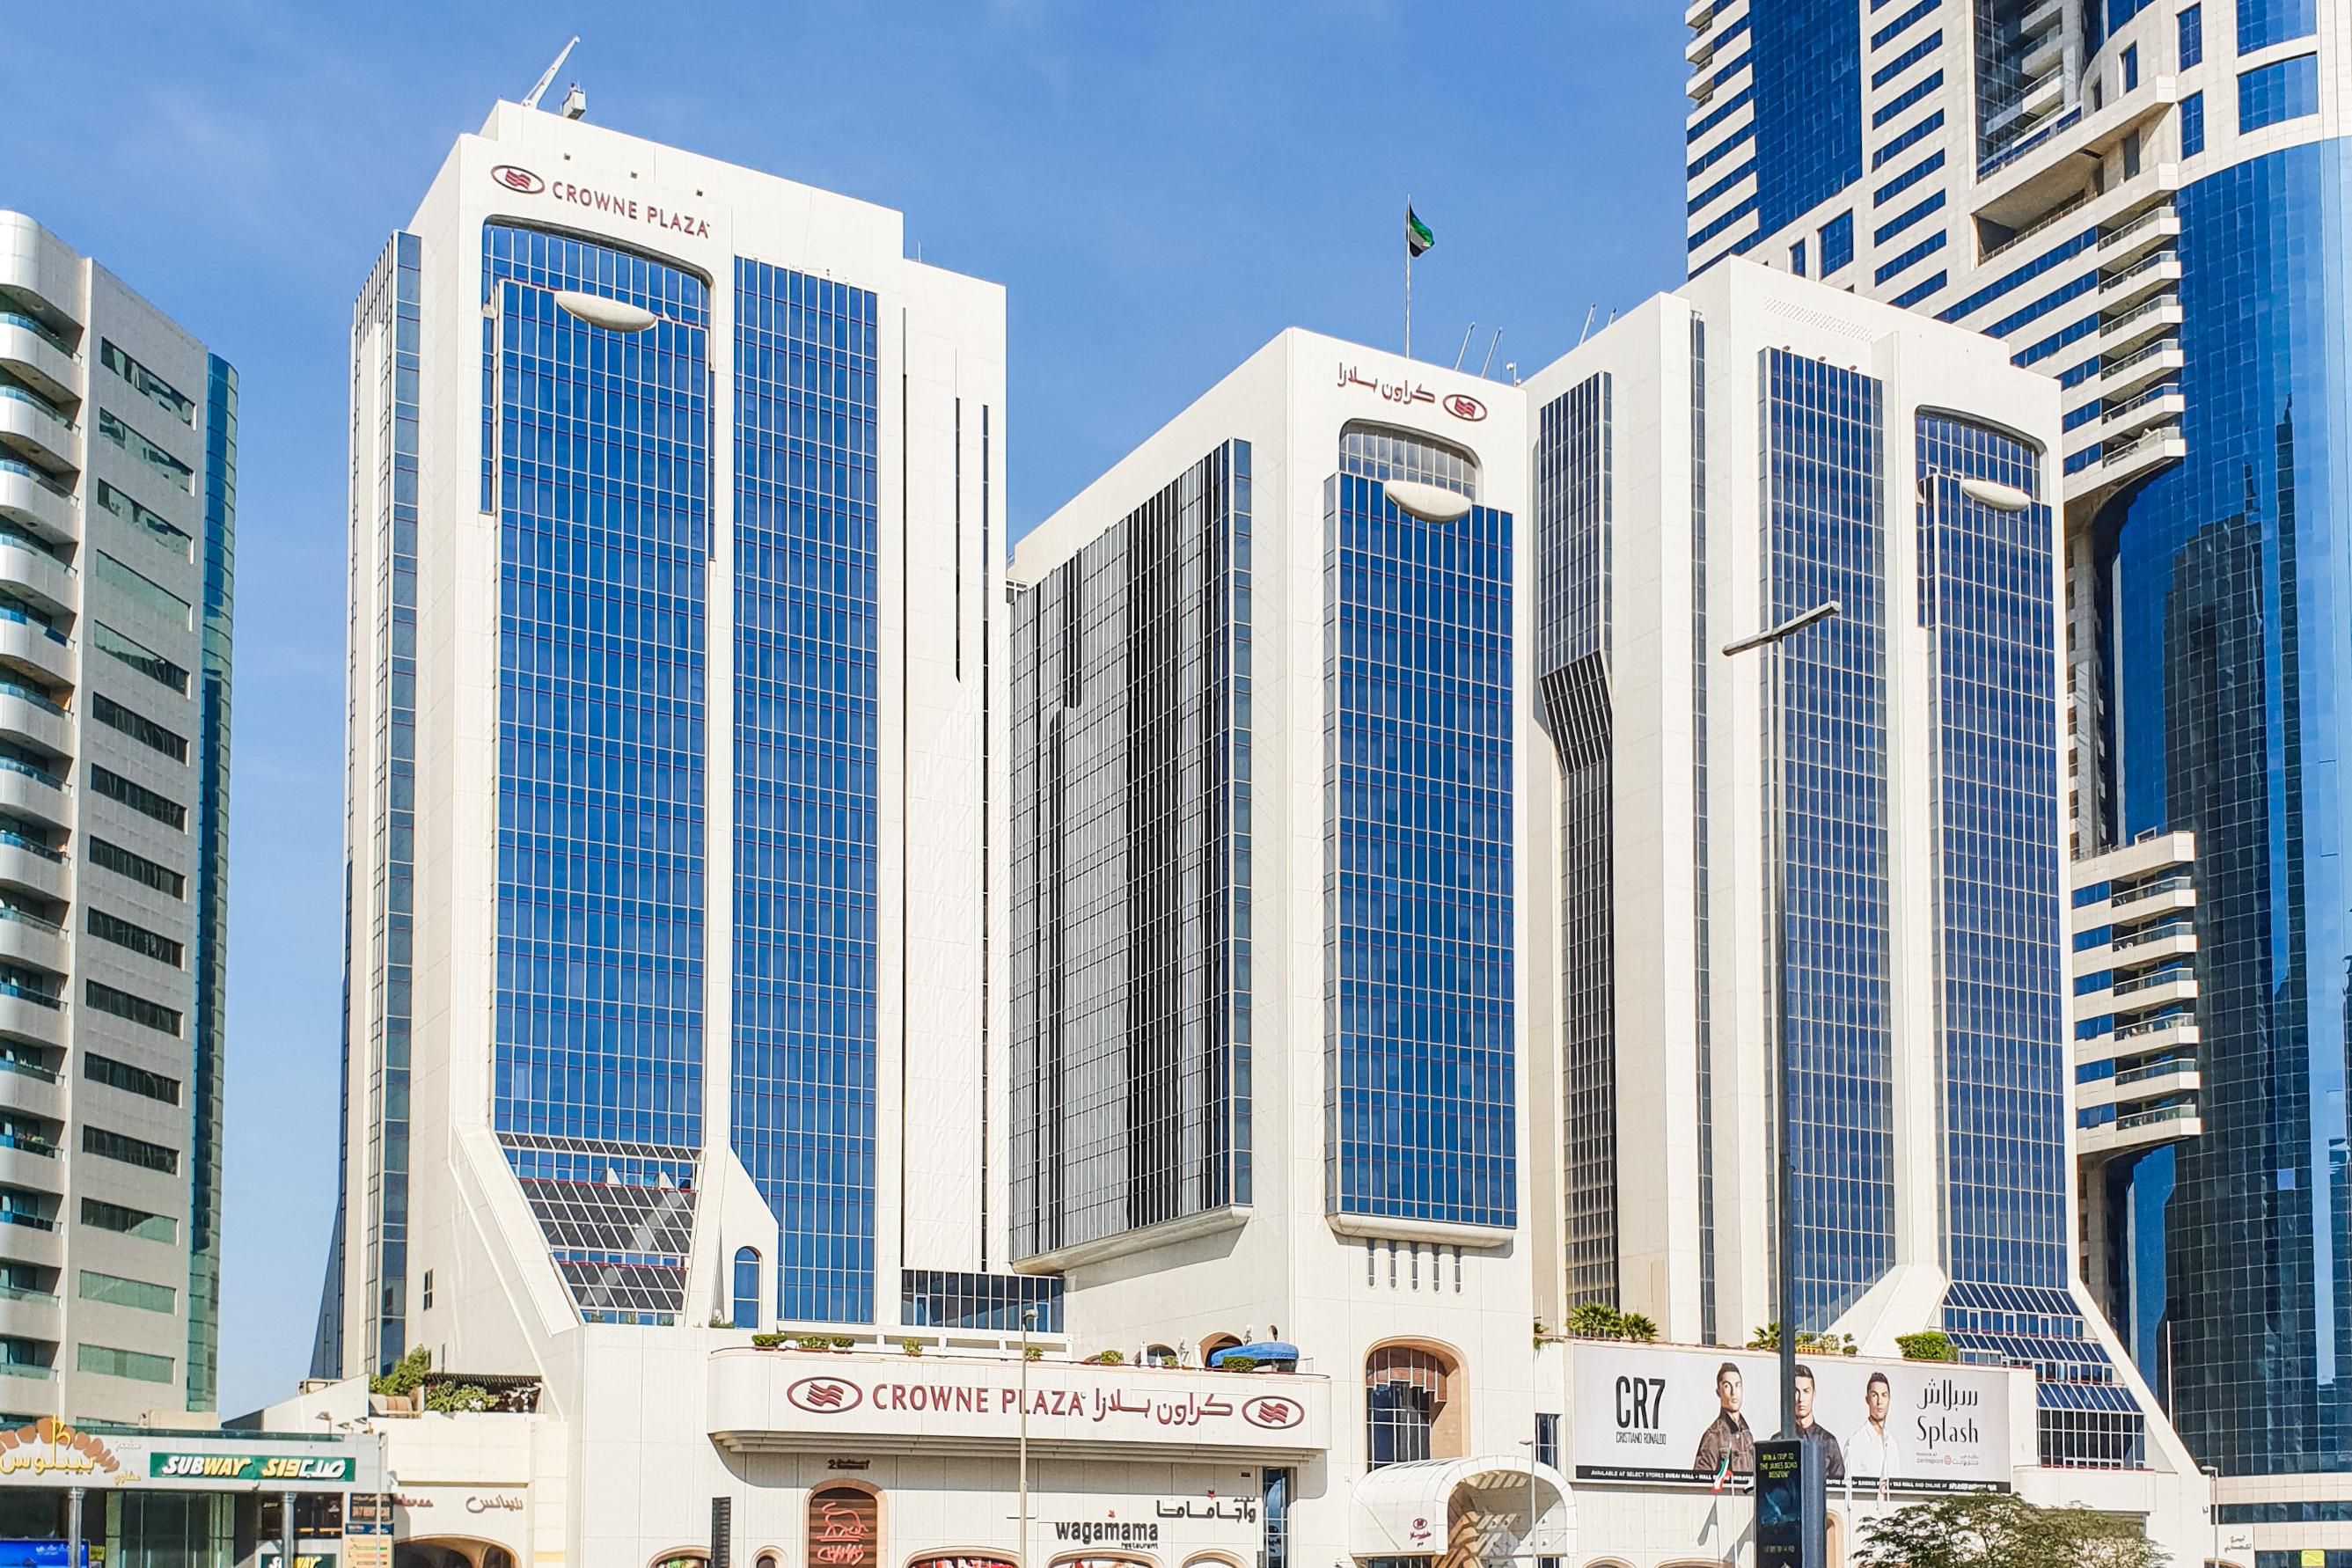 Exterior photo of Crowne Plaza Dubai on a sunny day